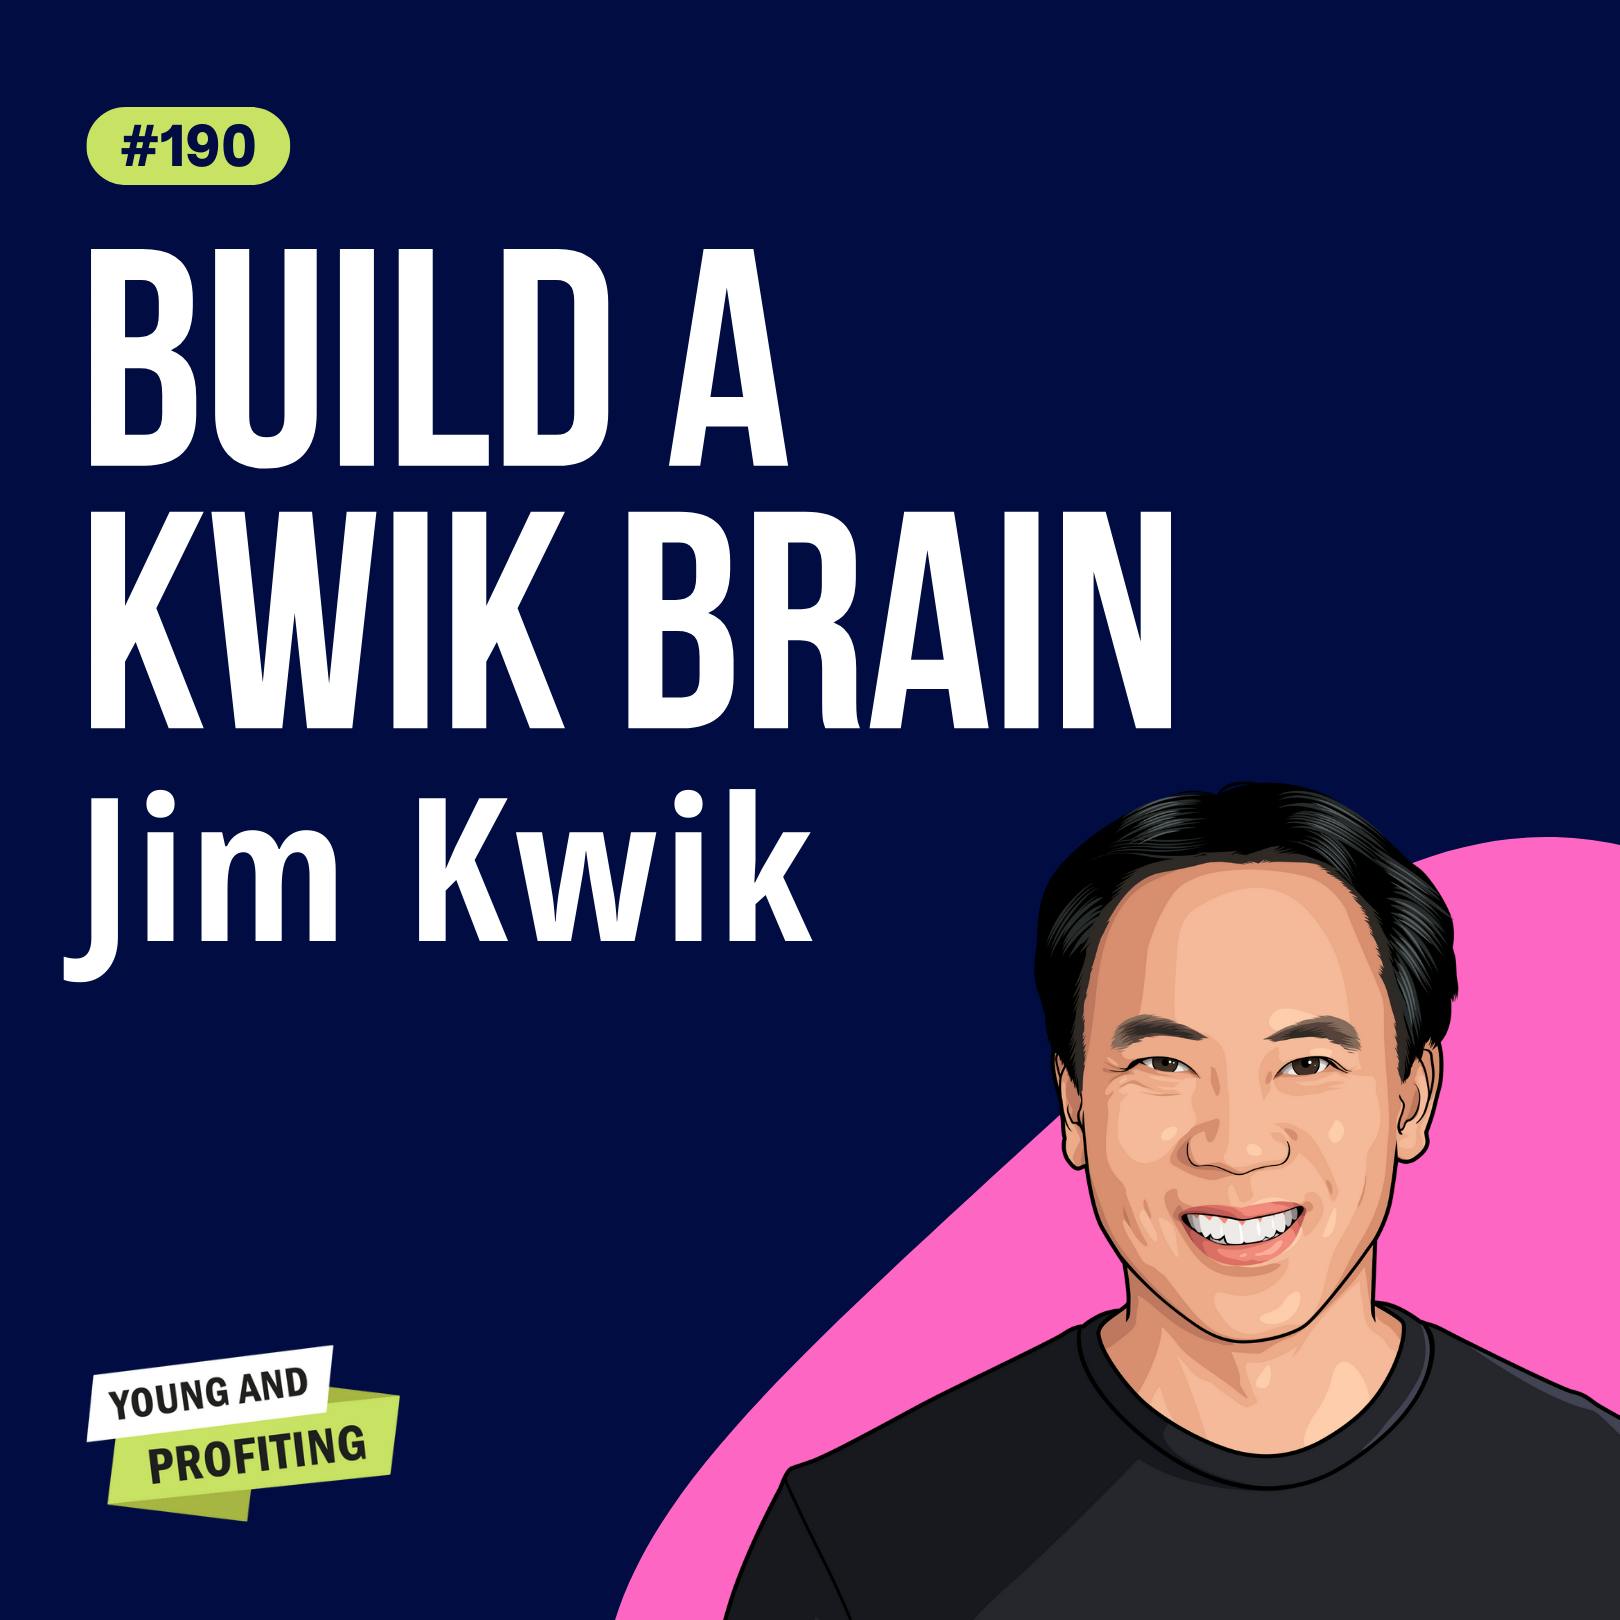 Jim Kwik: From Broken Brain To Kwik Brain - Learn Faster and Improve Your Memory | E190 by Hala Taha | YAP Media Network